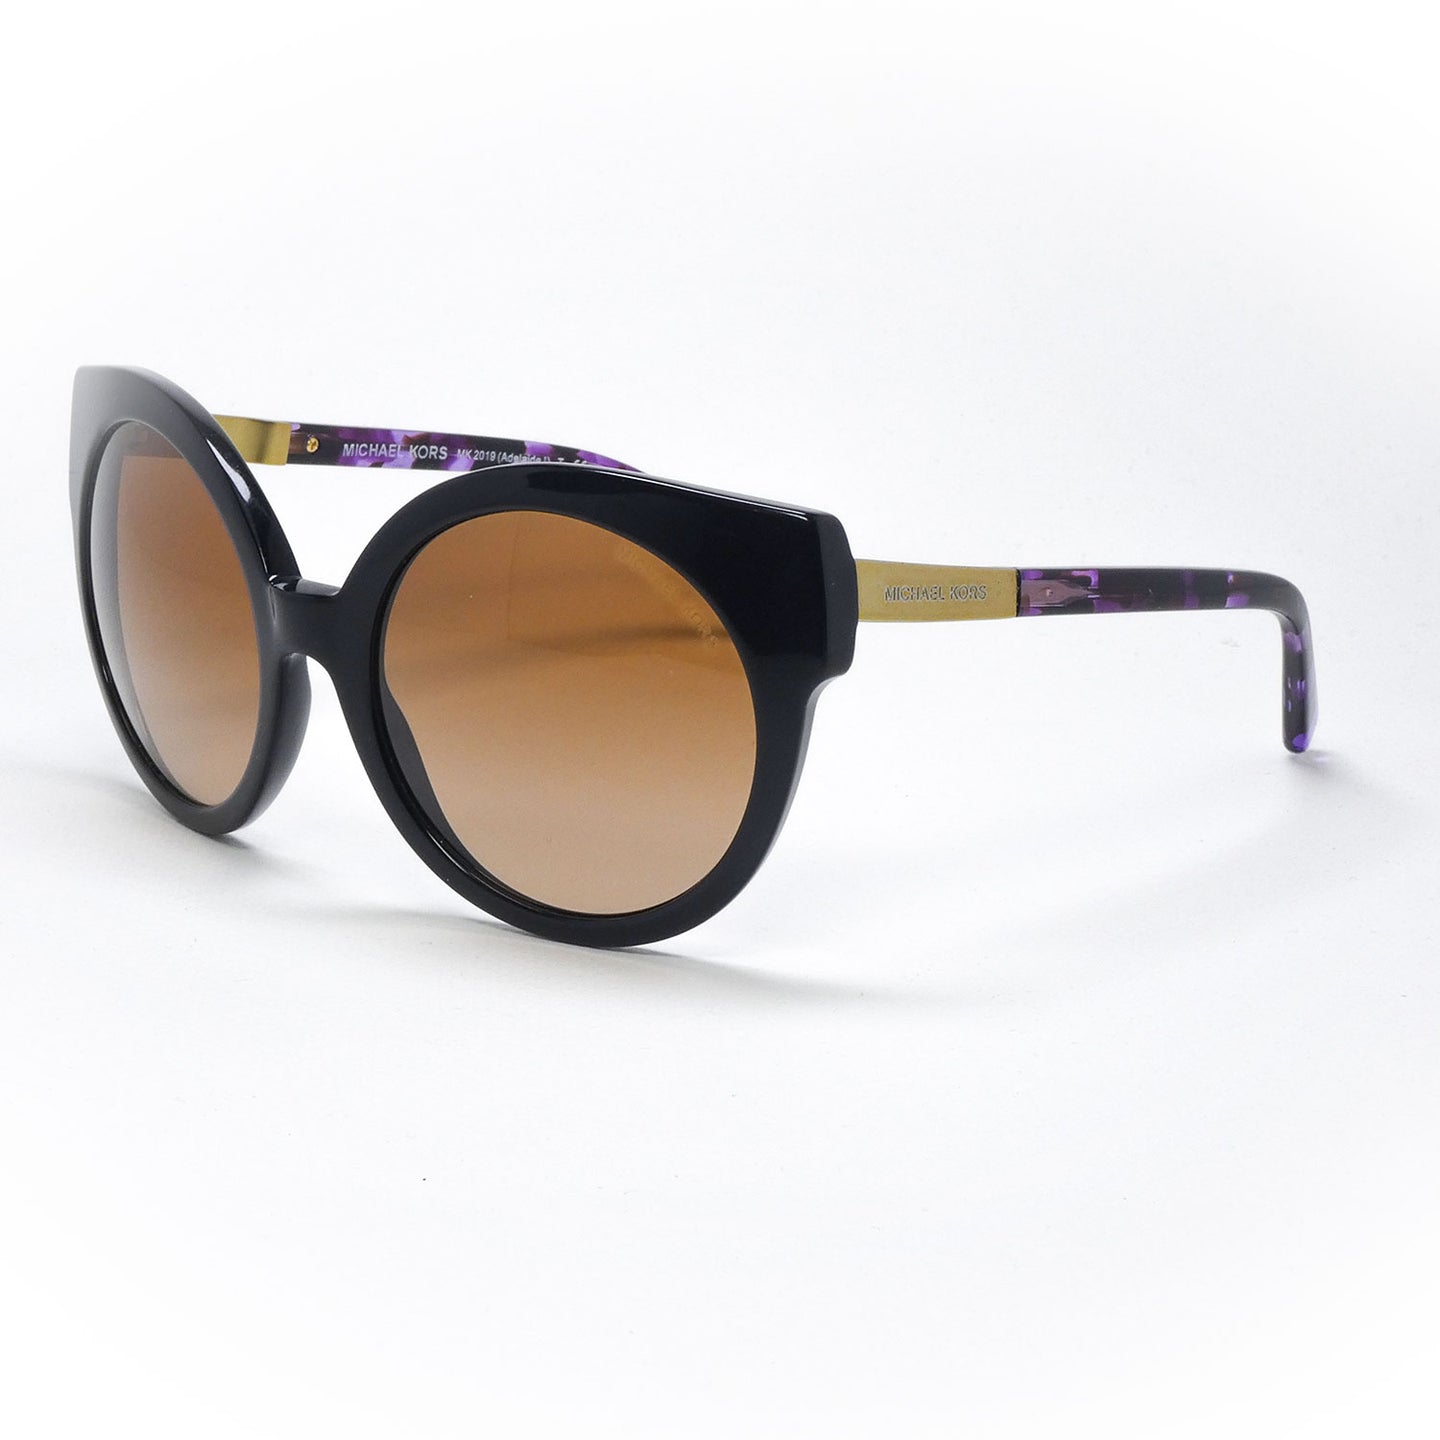 sunglasses michael kors model mk 2019 color 315313 angled view